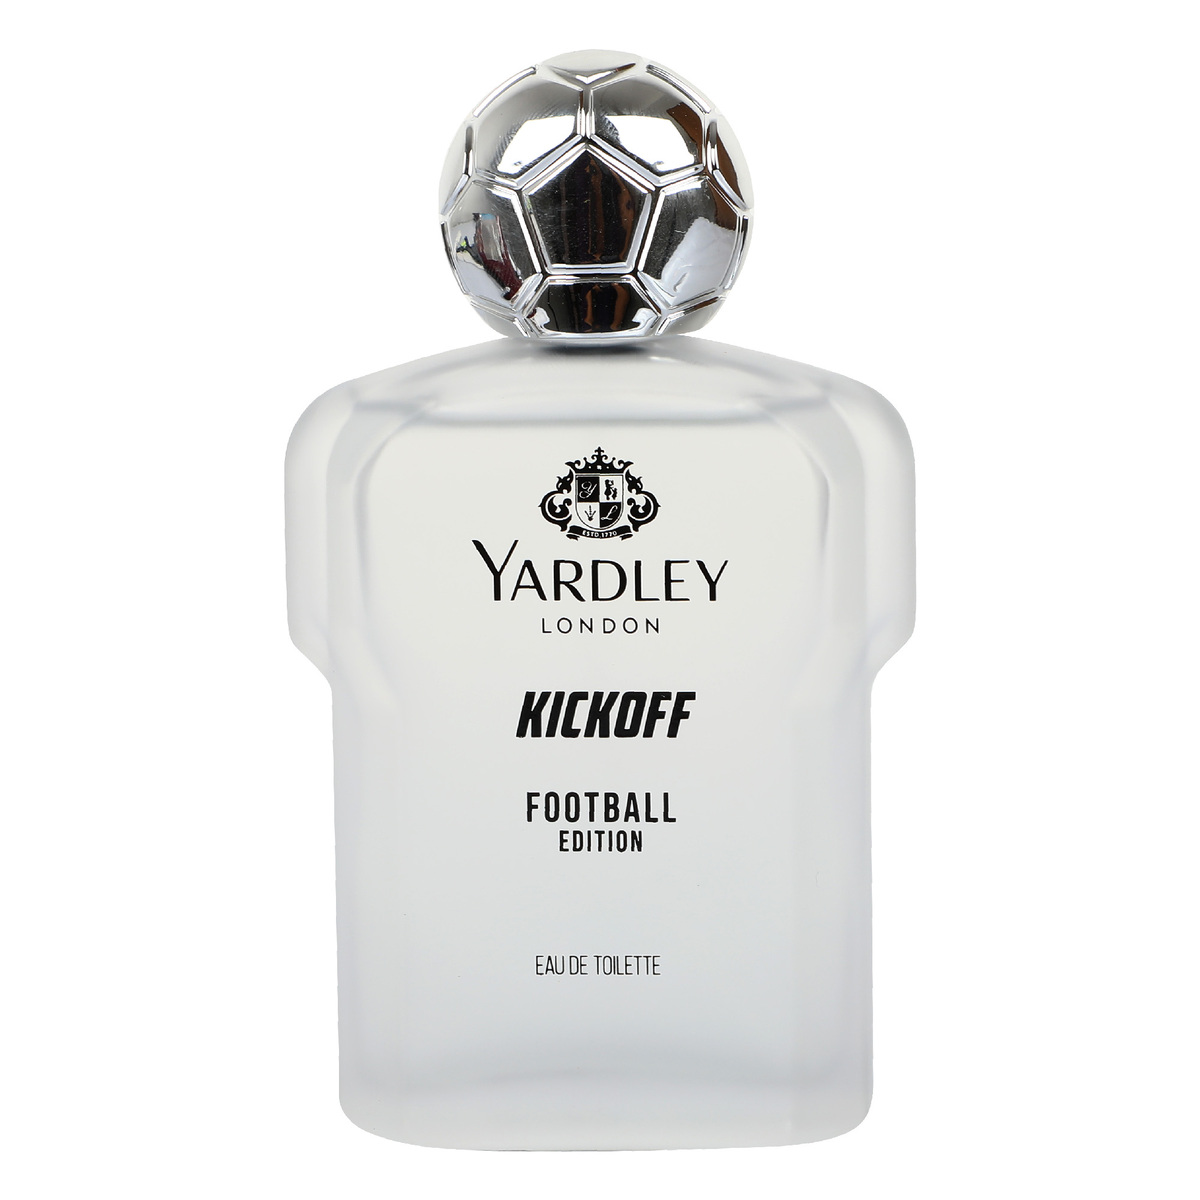 Yardley London EDT, Football Edition Kick Off, 100 ml